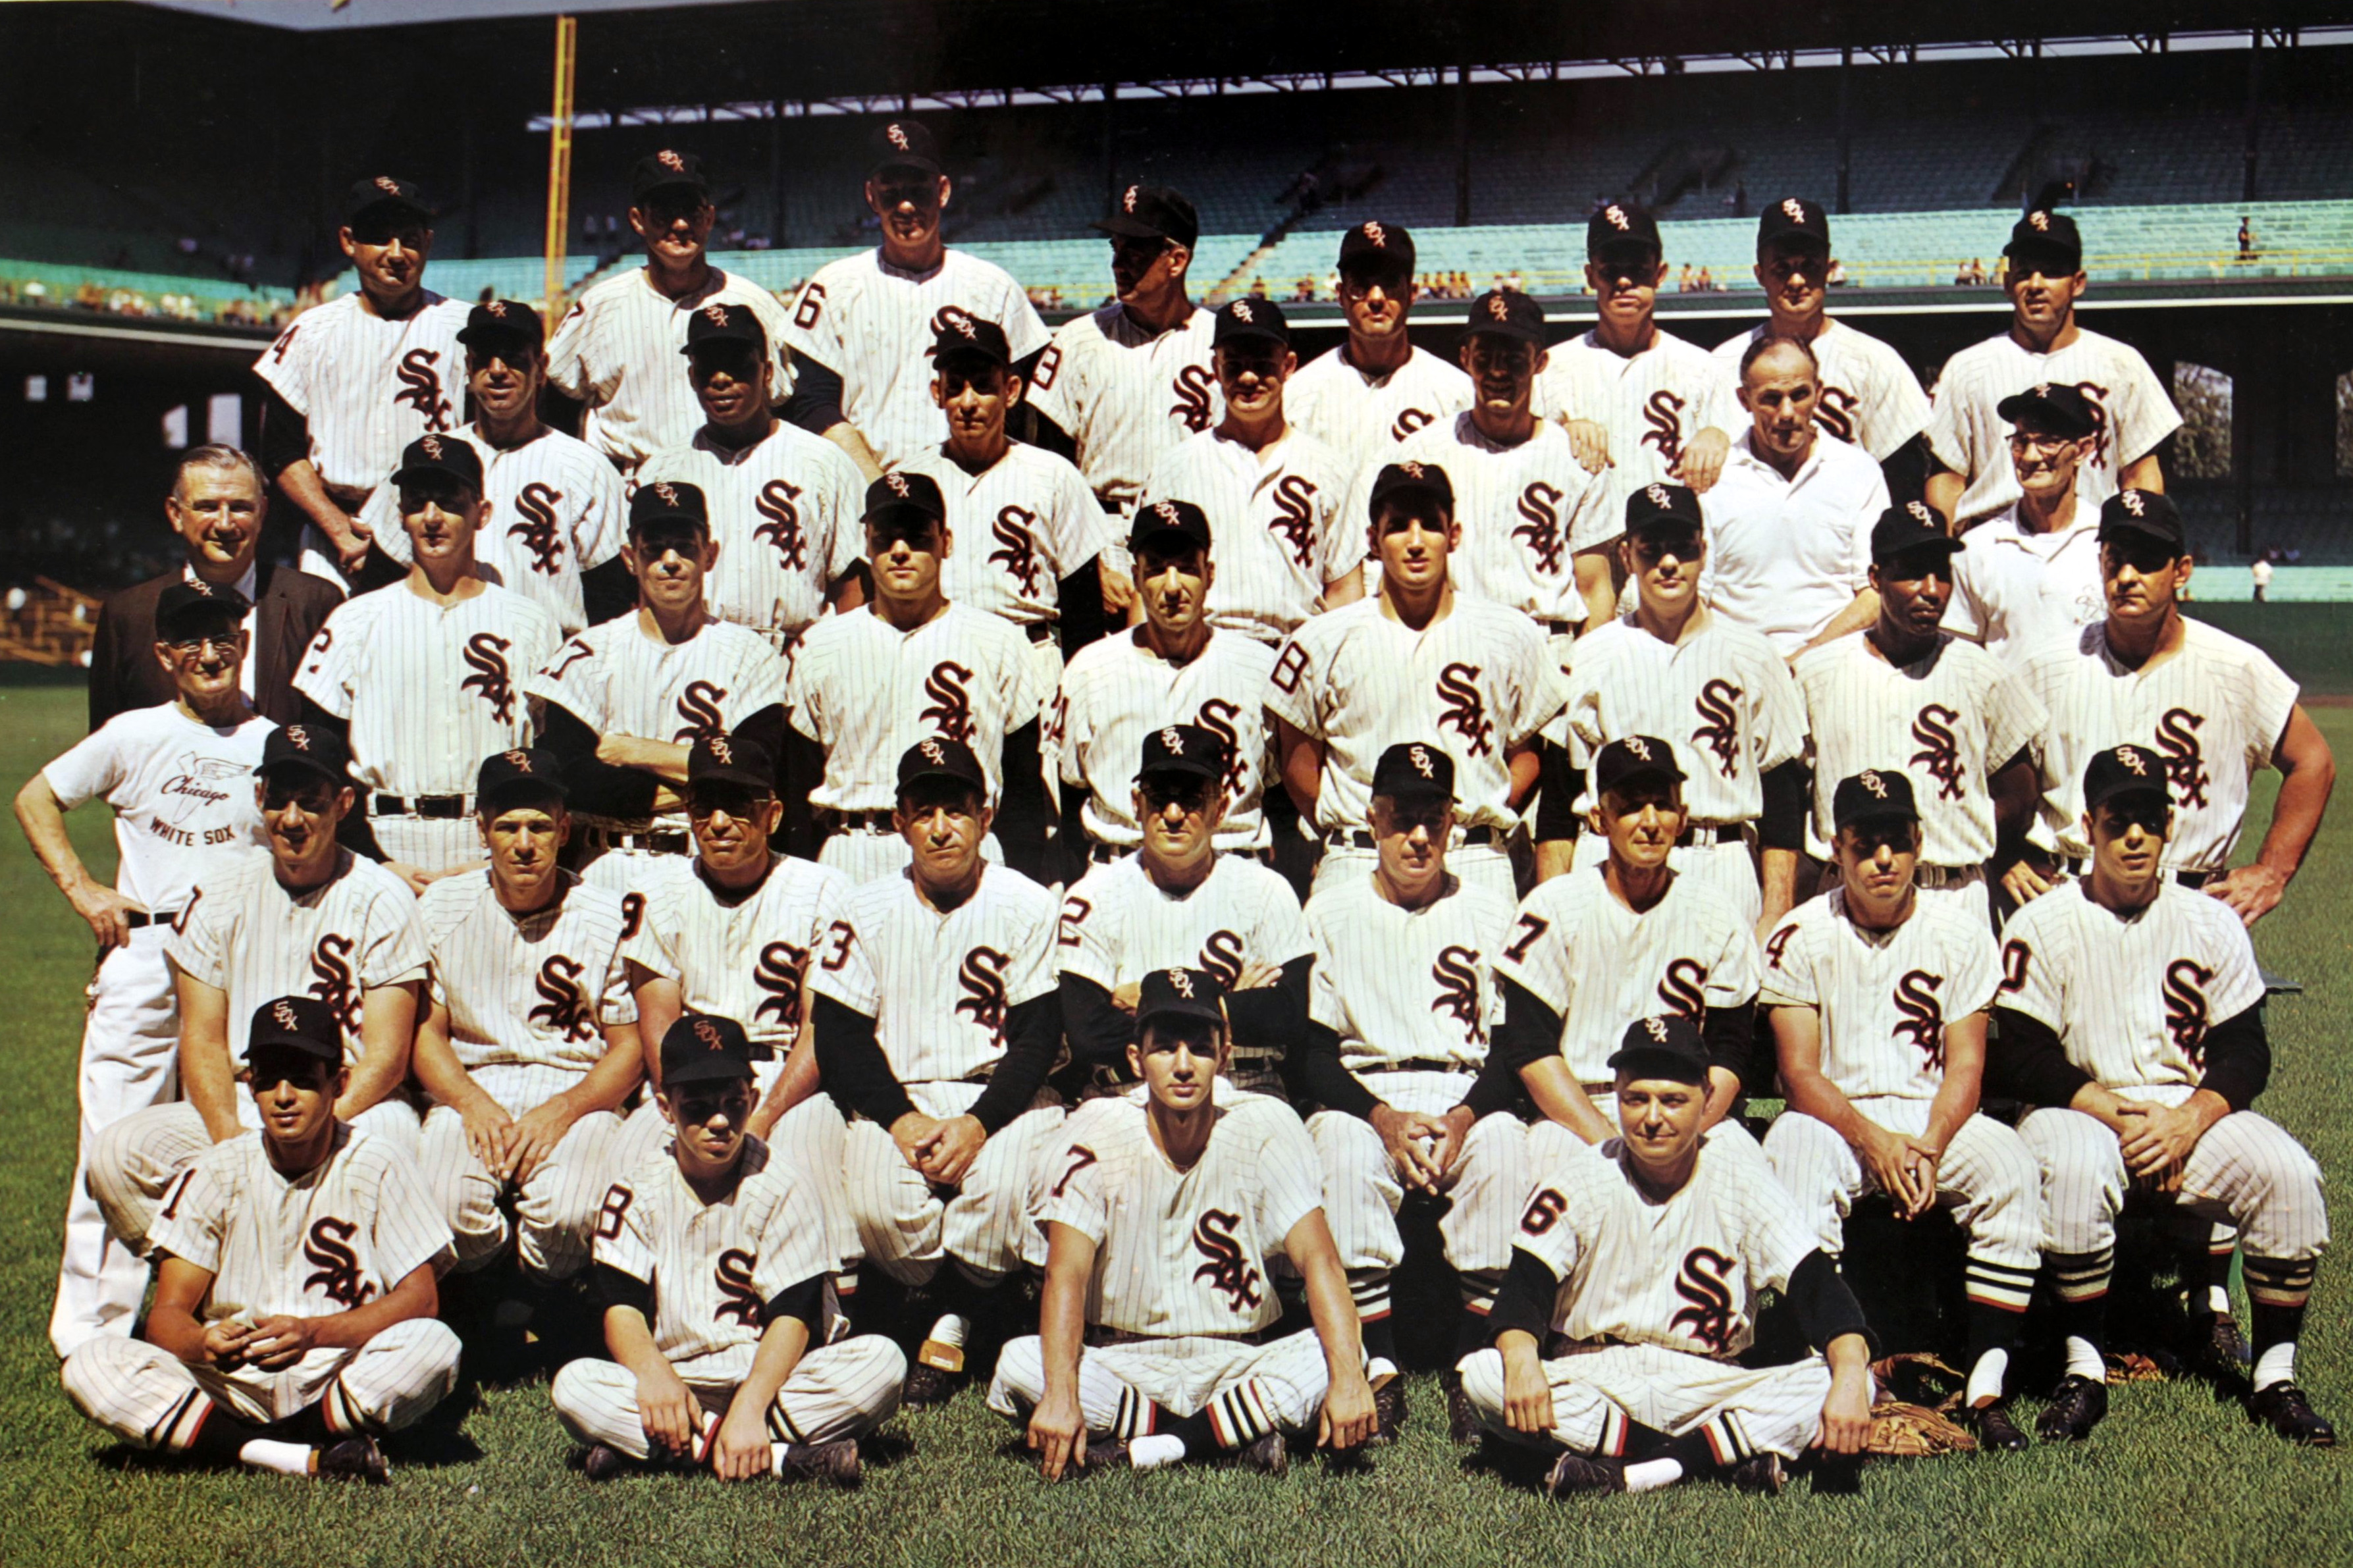 Chicago White Sox 1959